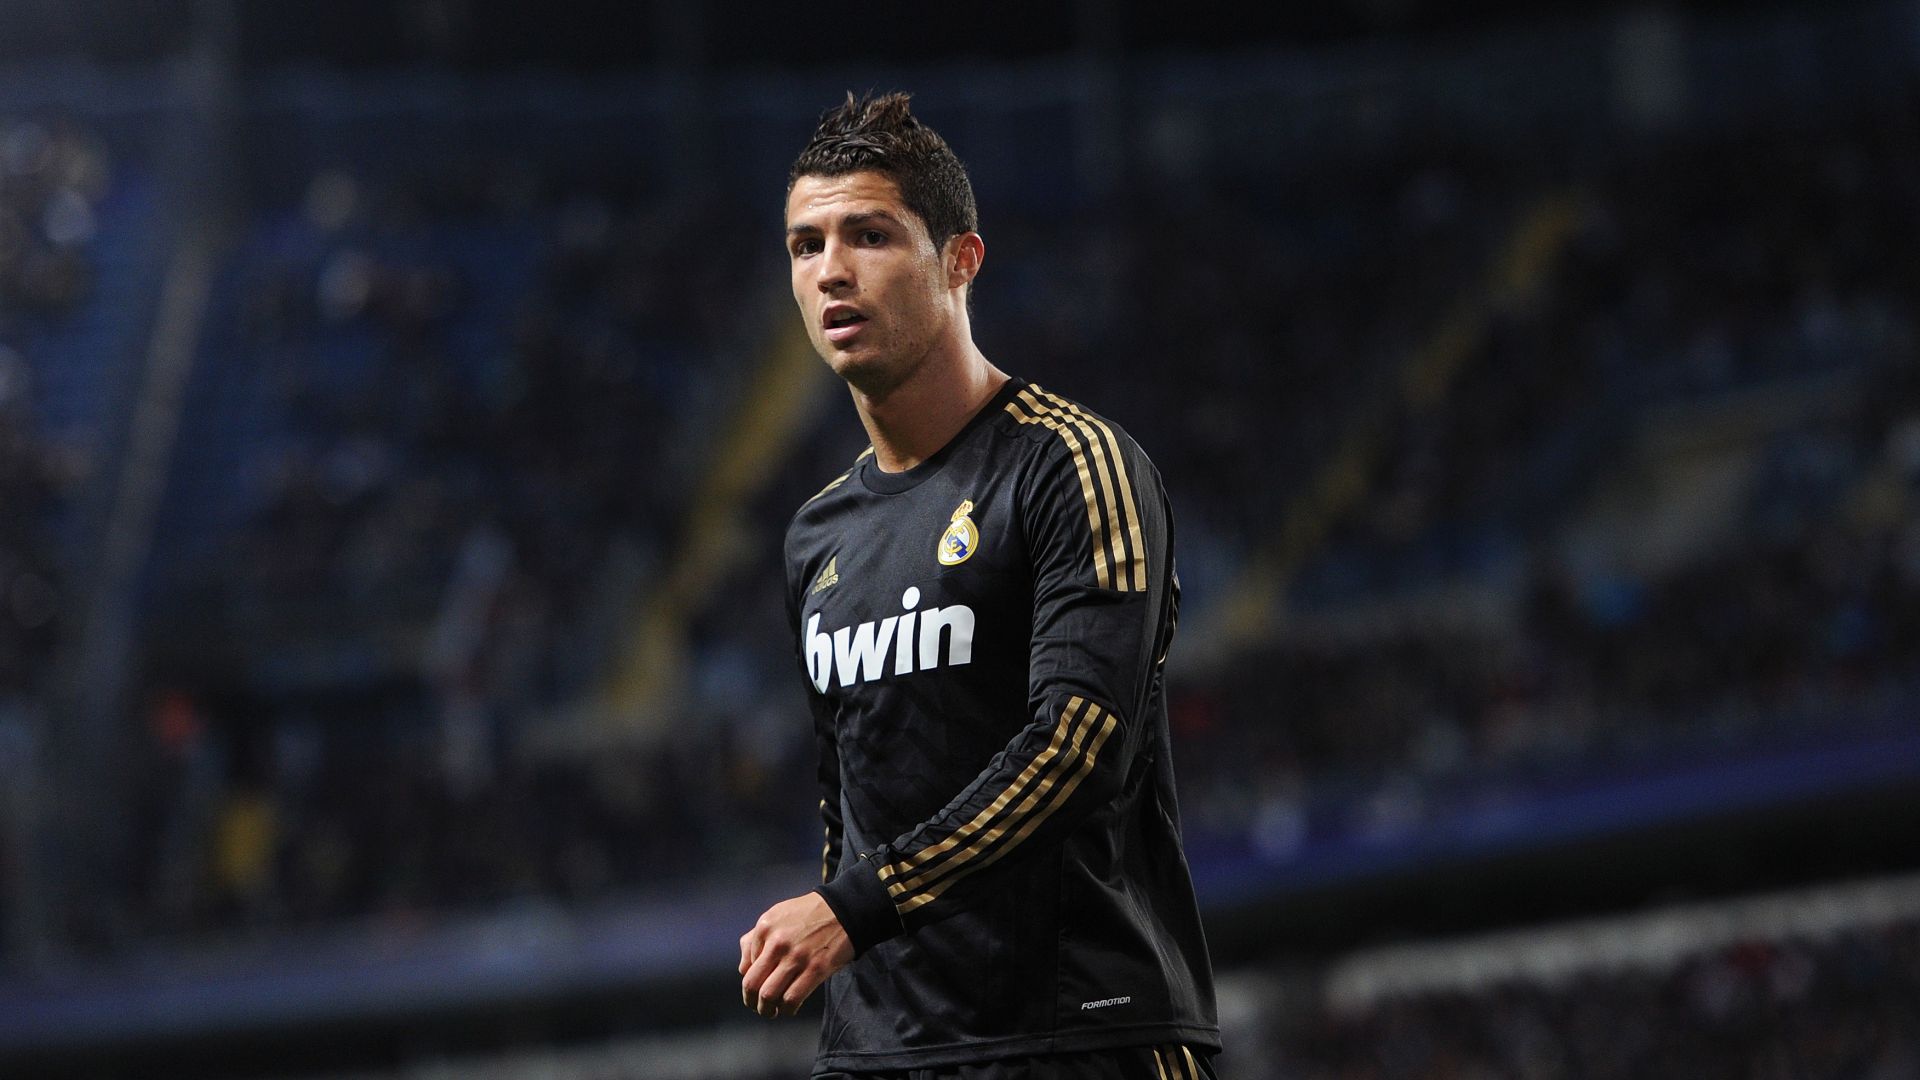 Wallpaper Football player, Cristiano Ronaldo soccer